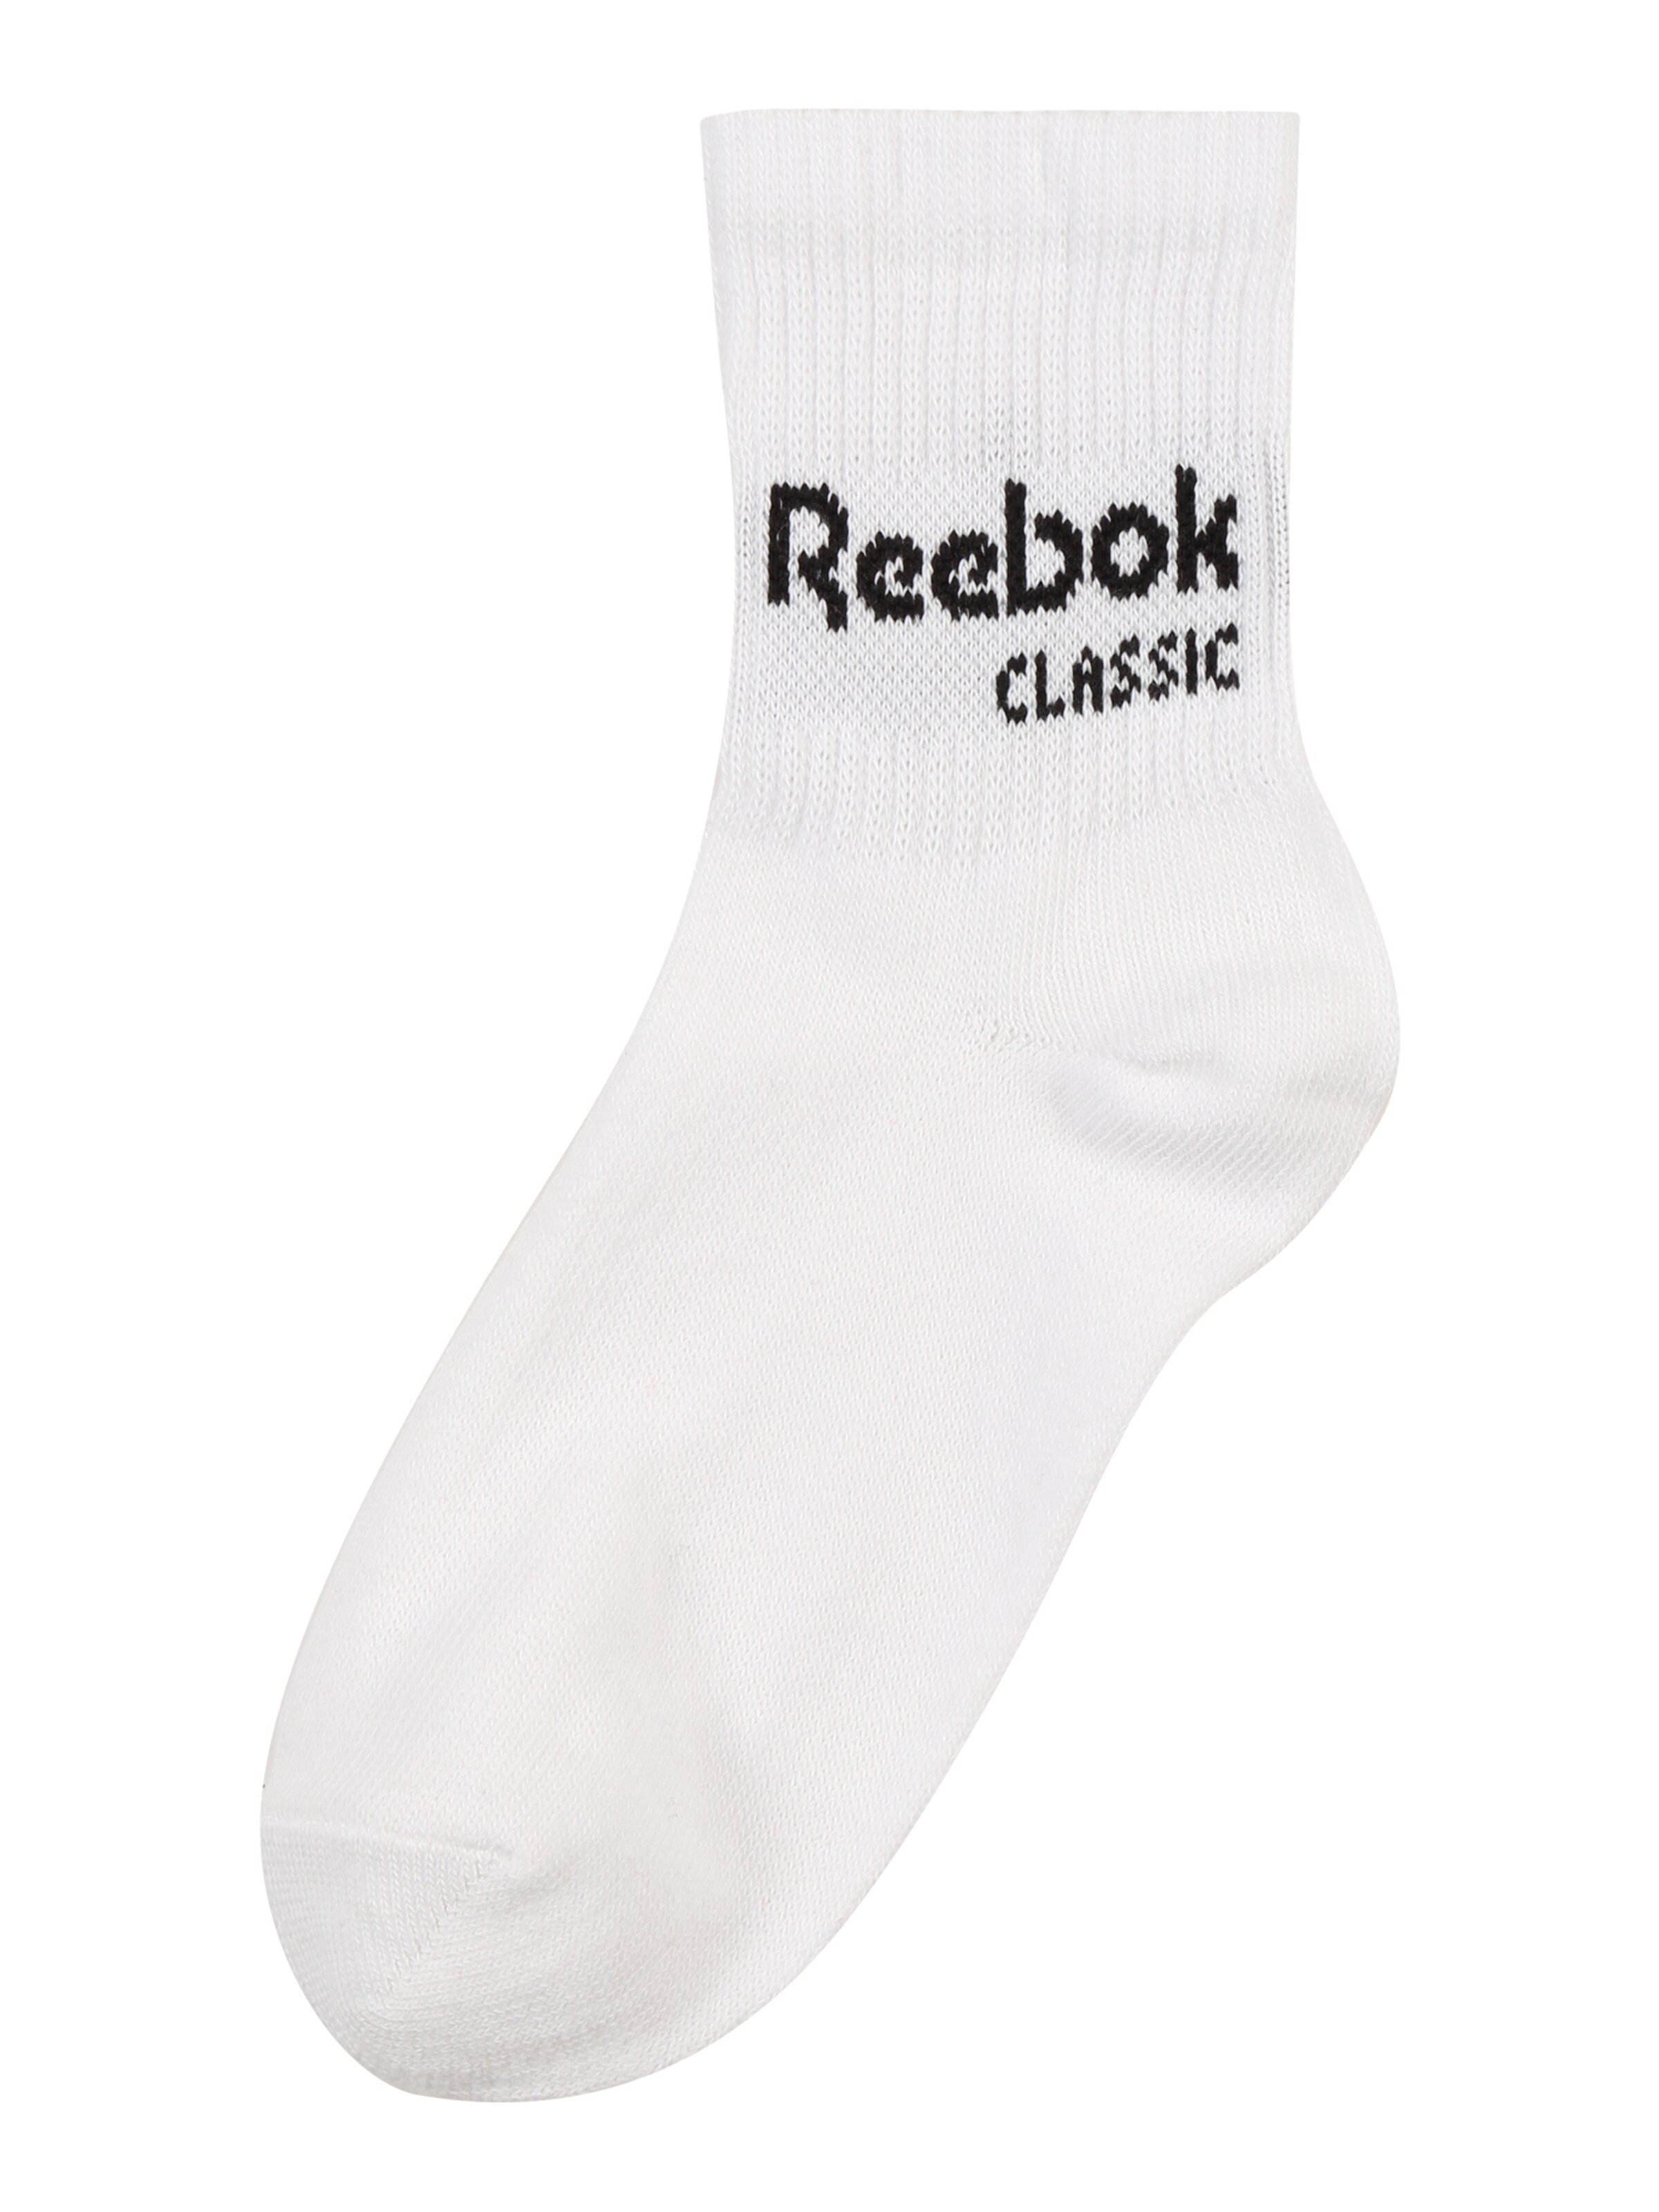 Reebok Classic Socken in schwarz / weiß | ABOUT YOU